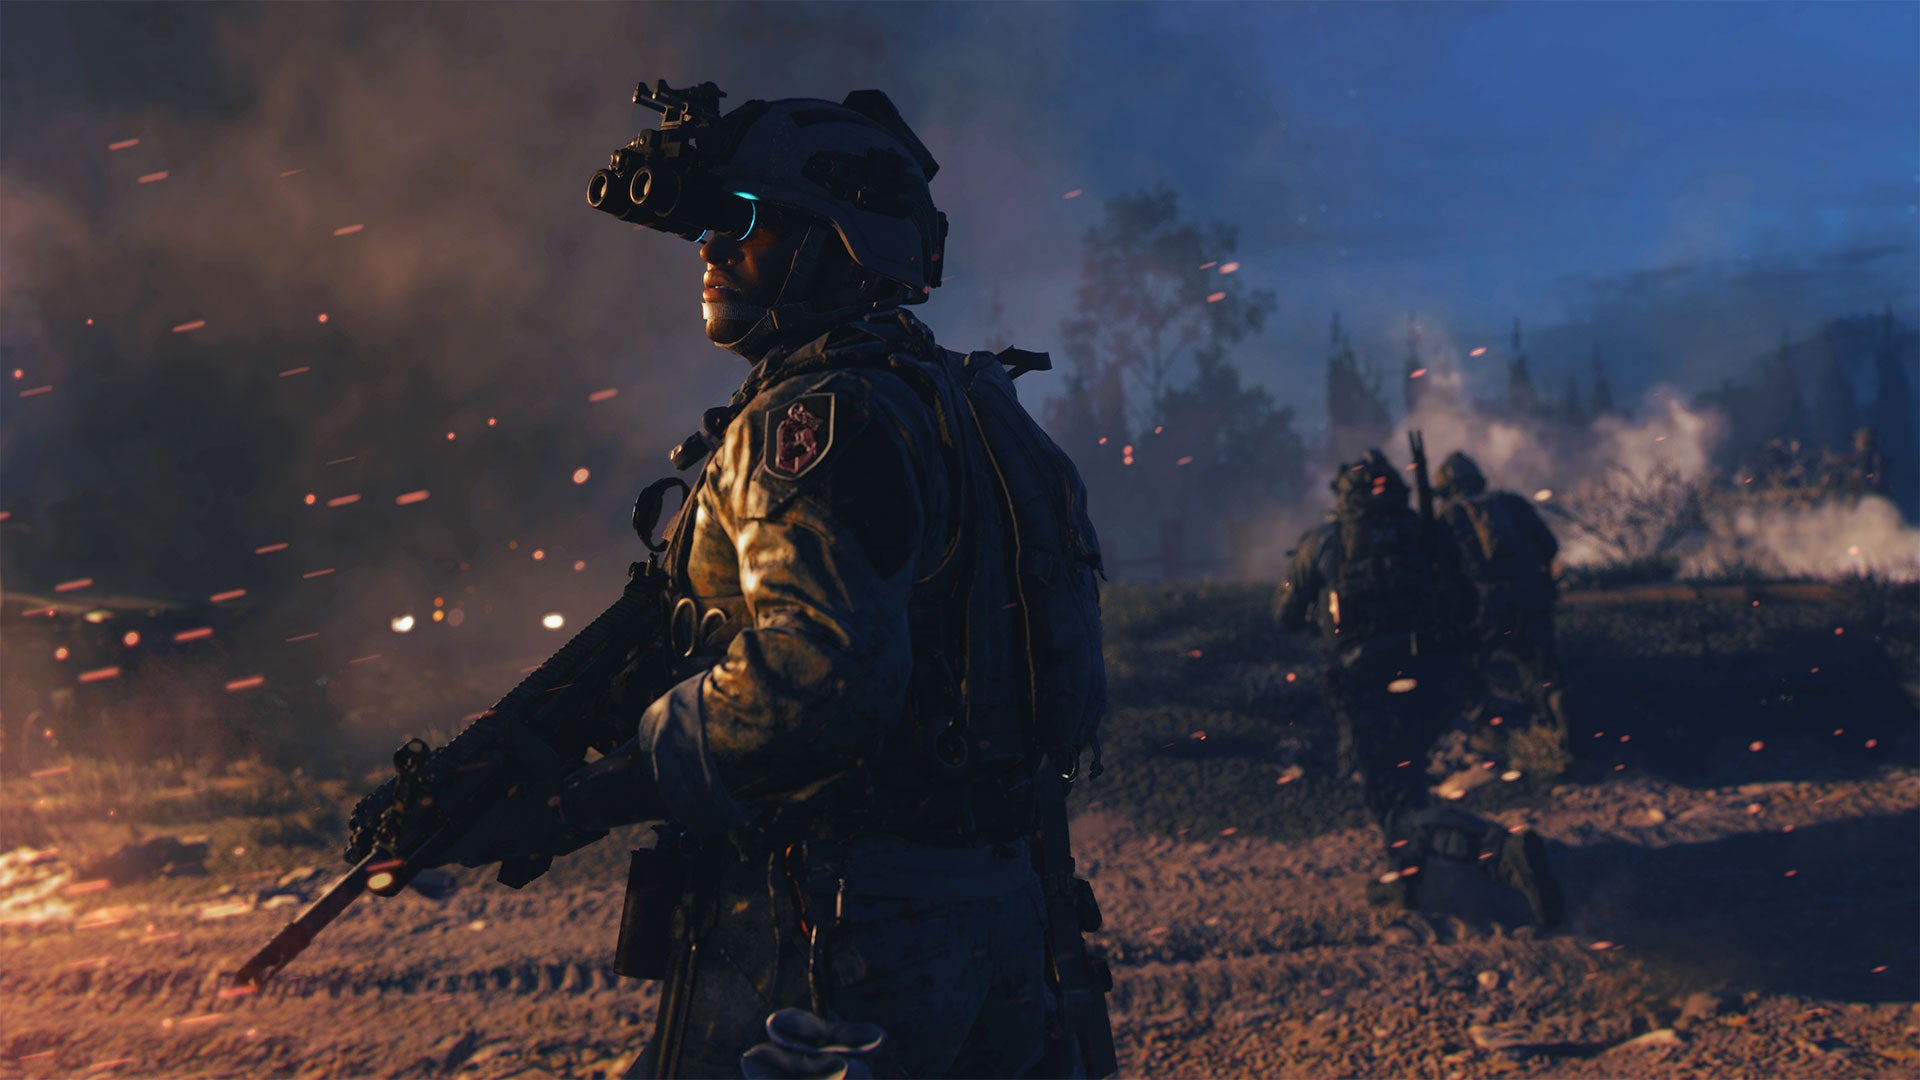 A soldier walks through a war-torn battlefield holding his rifle in Modern Warfare 2.